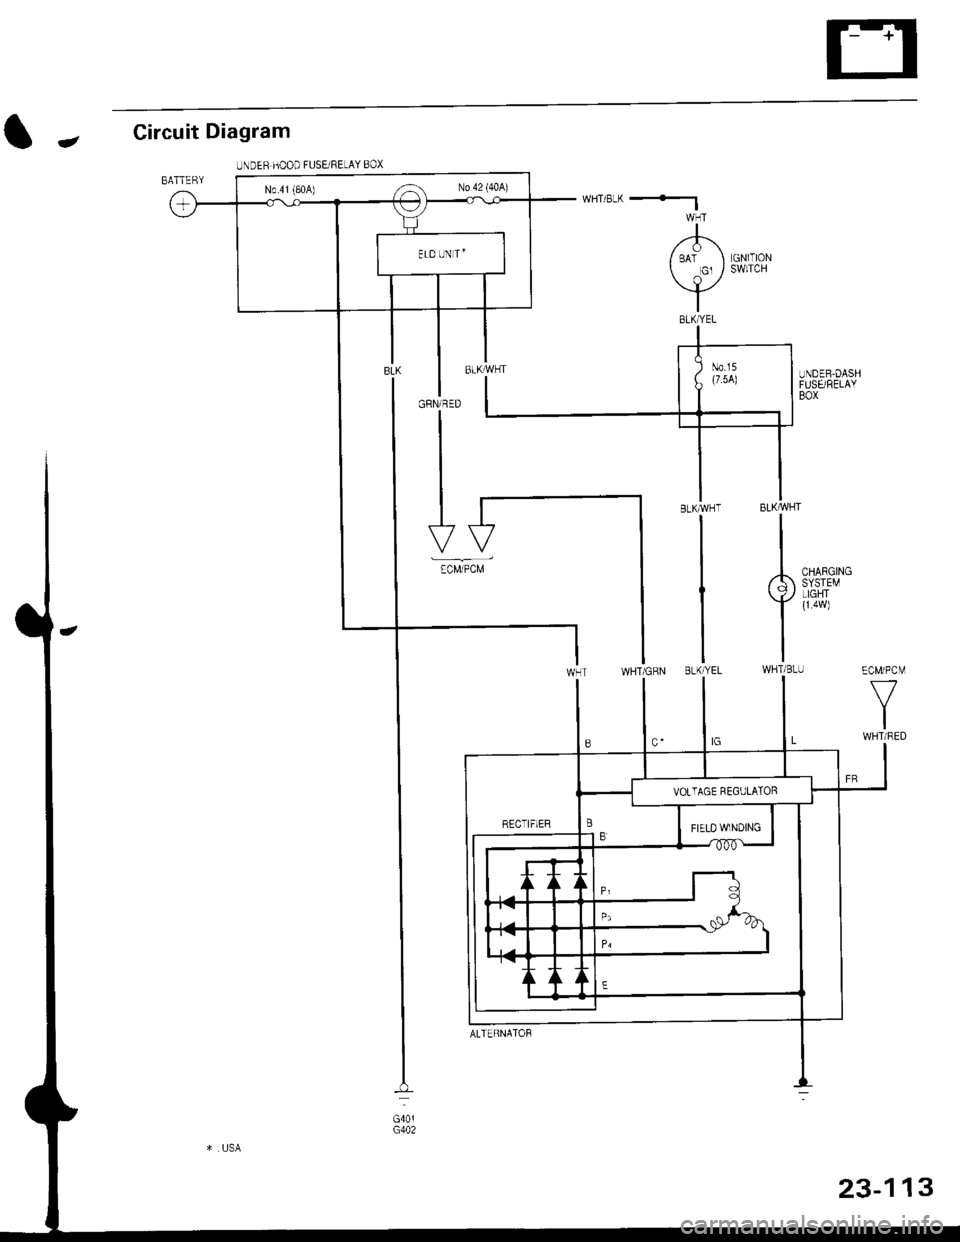 HONDA CIVIC 1999 6.G User Guide Circuit Diagram
IJNDER HOOD FUSEi RELAY BOX
-
BATTERY
LGNlTIONSWITCH
I
,-F\I BAT I Gl /
\l_/
I
GRN/RED
I
N0.41 (80A) ,-a No 42 (40A)
ECM/PCM
f7
IWHT/RED
CHARGINGSYSTEMLIGHTI
TWHTi BLU
1323-1
ALTERNAT